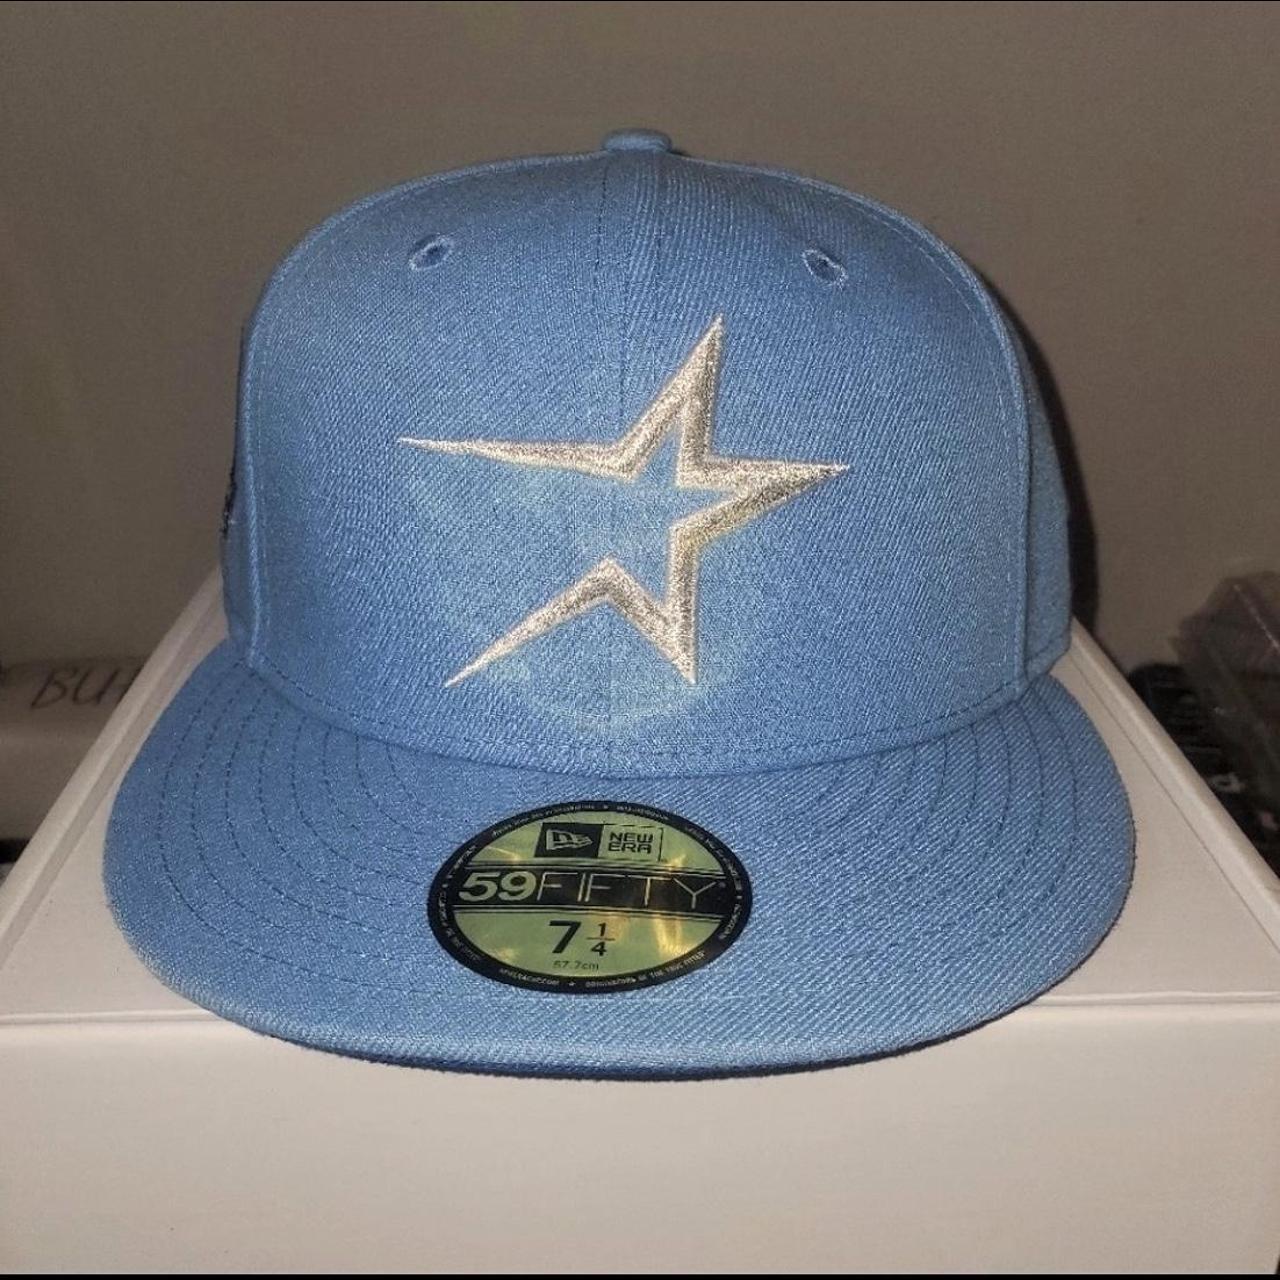 Pin on Houston Astros Hats